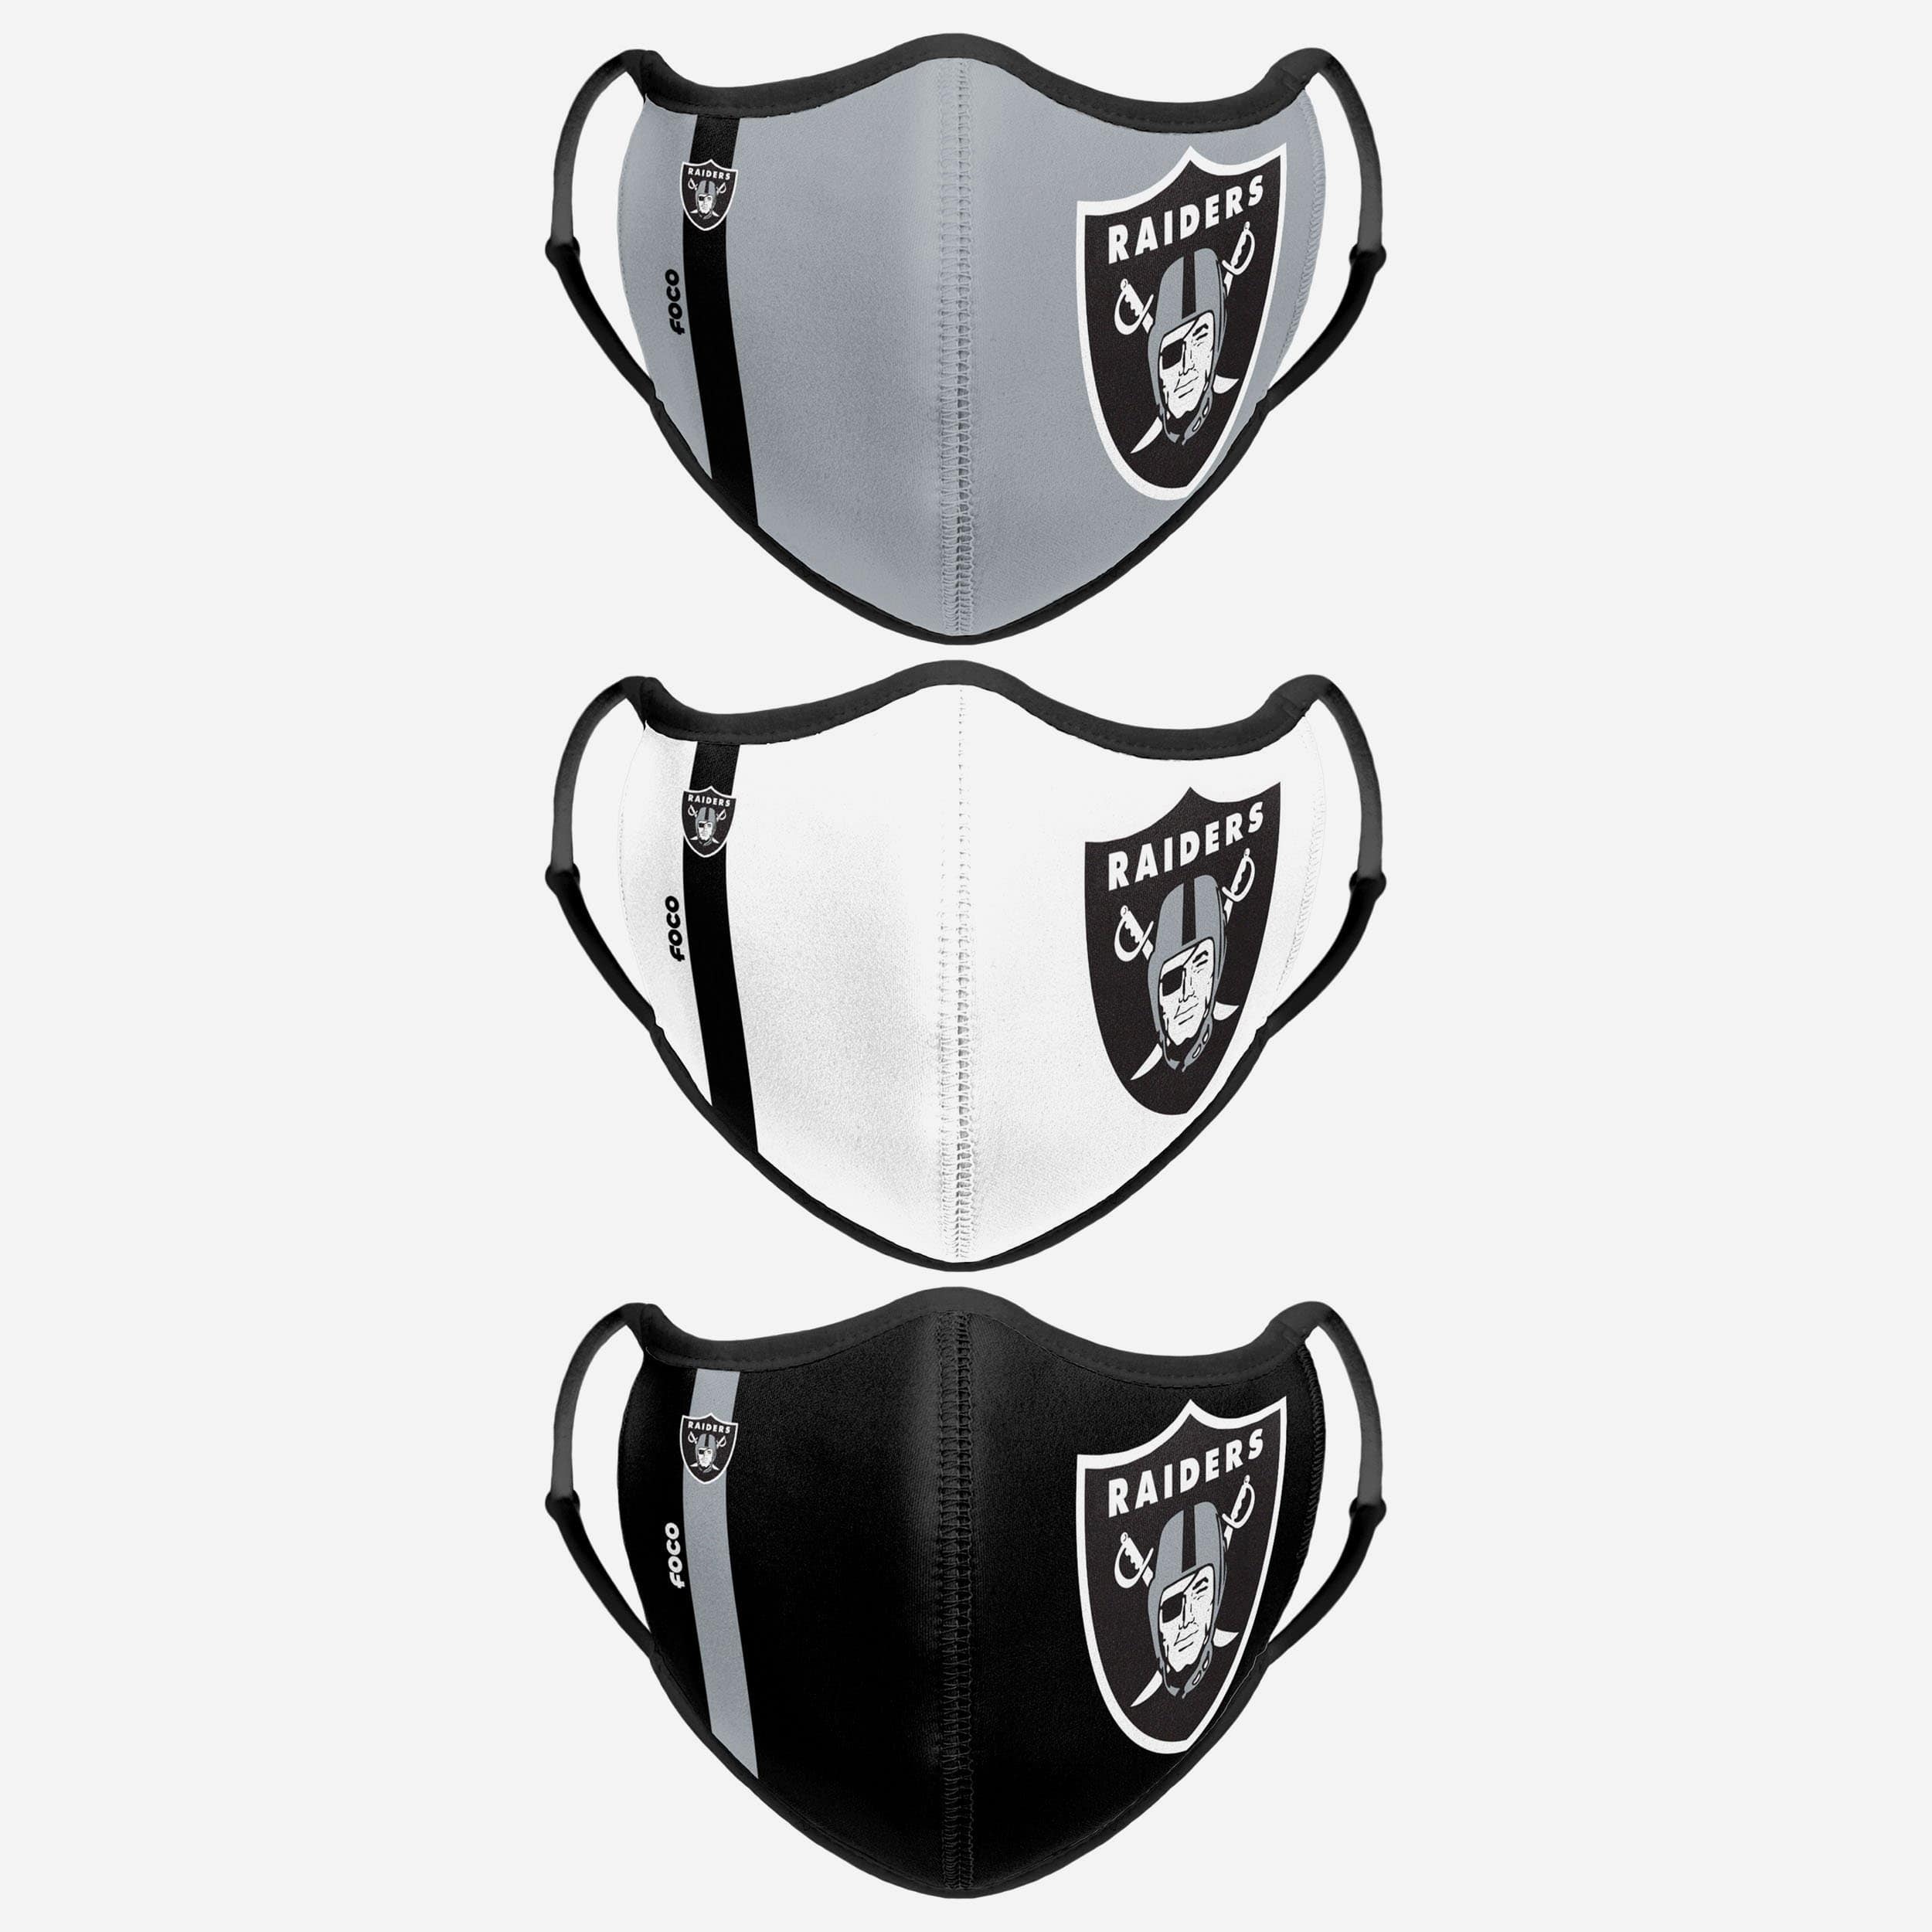 NFL - Las Vegas Raiders - Flash Socks - Pack of 3 Size: L, 29.90 CHF